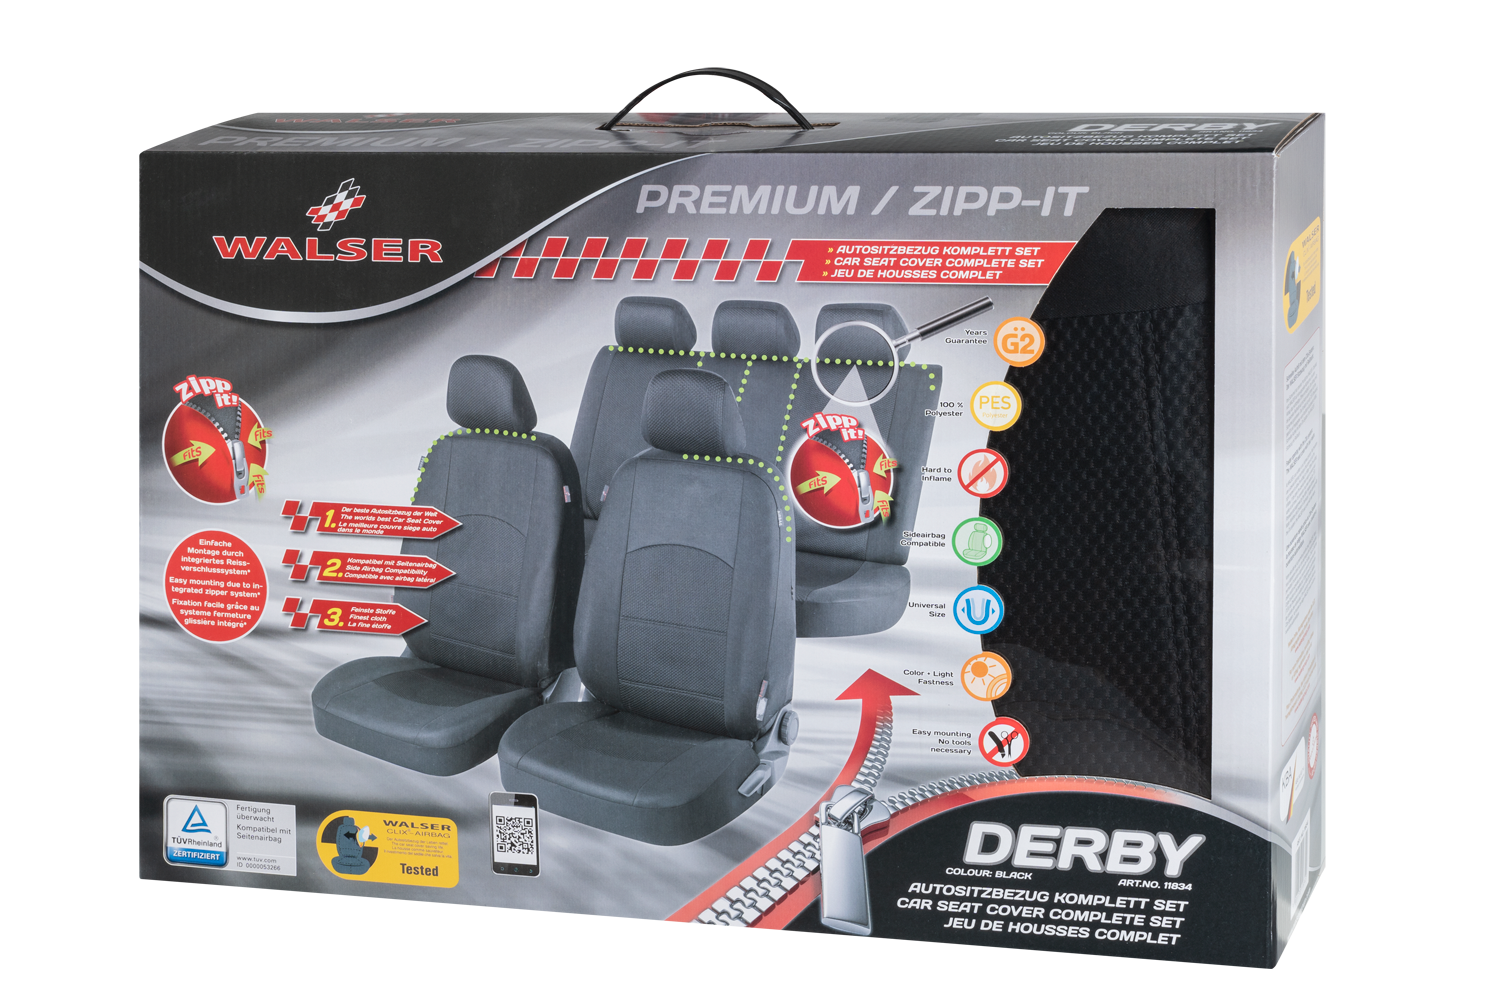 ZIPP IT Premium Derby car Seat covers with zipper system